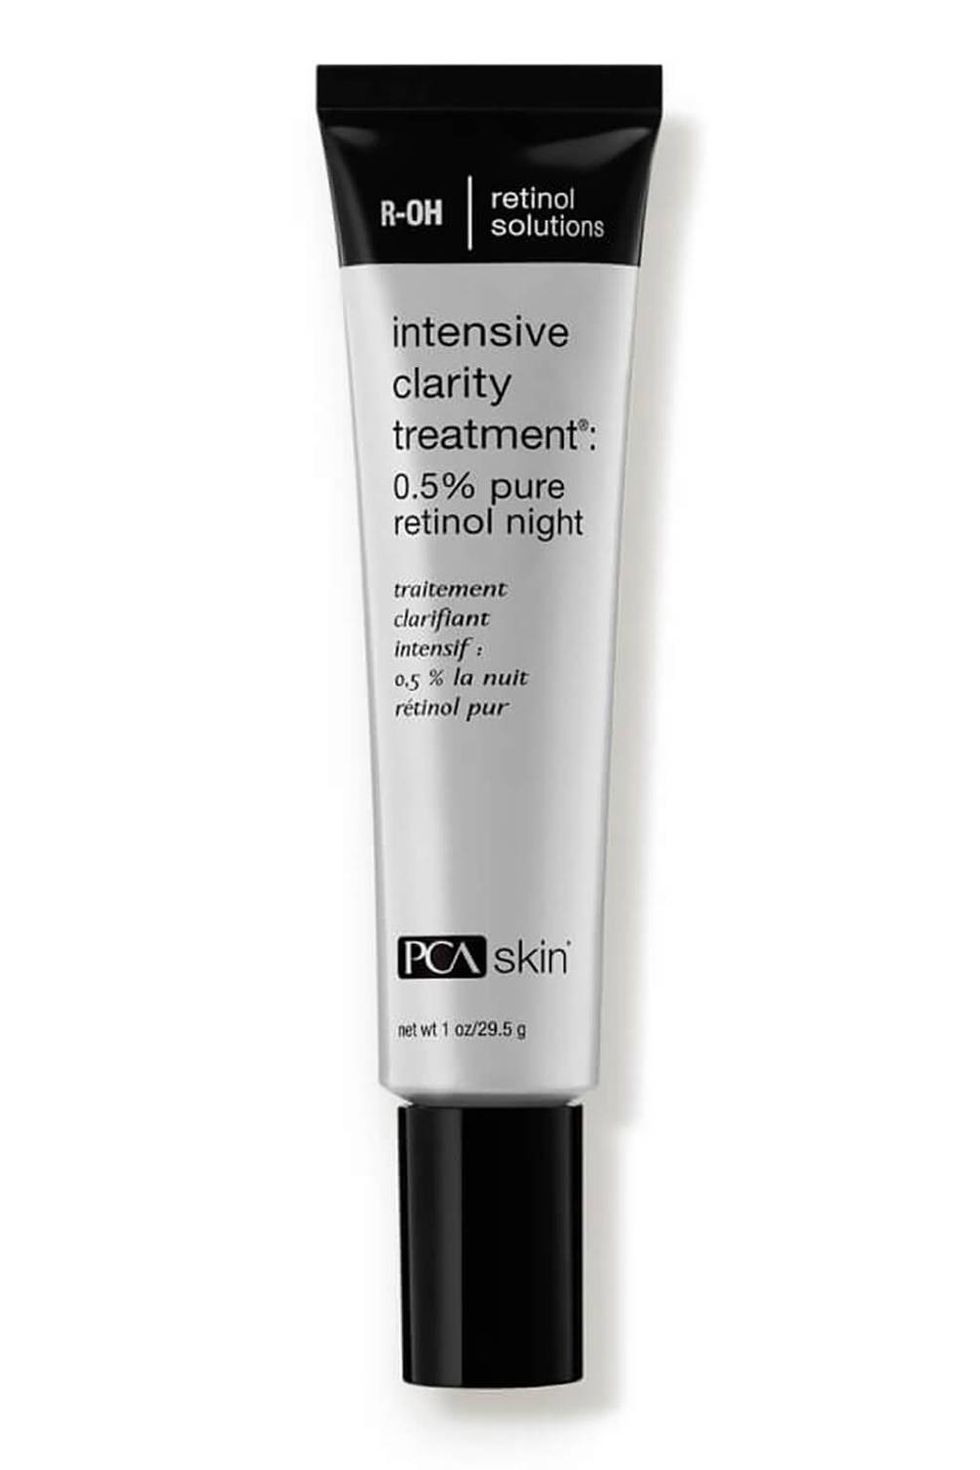 PCA Skin Intensive Clarity Treatment 0.5 Pure Retinol Night 